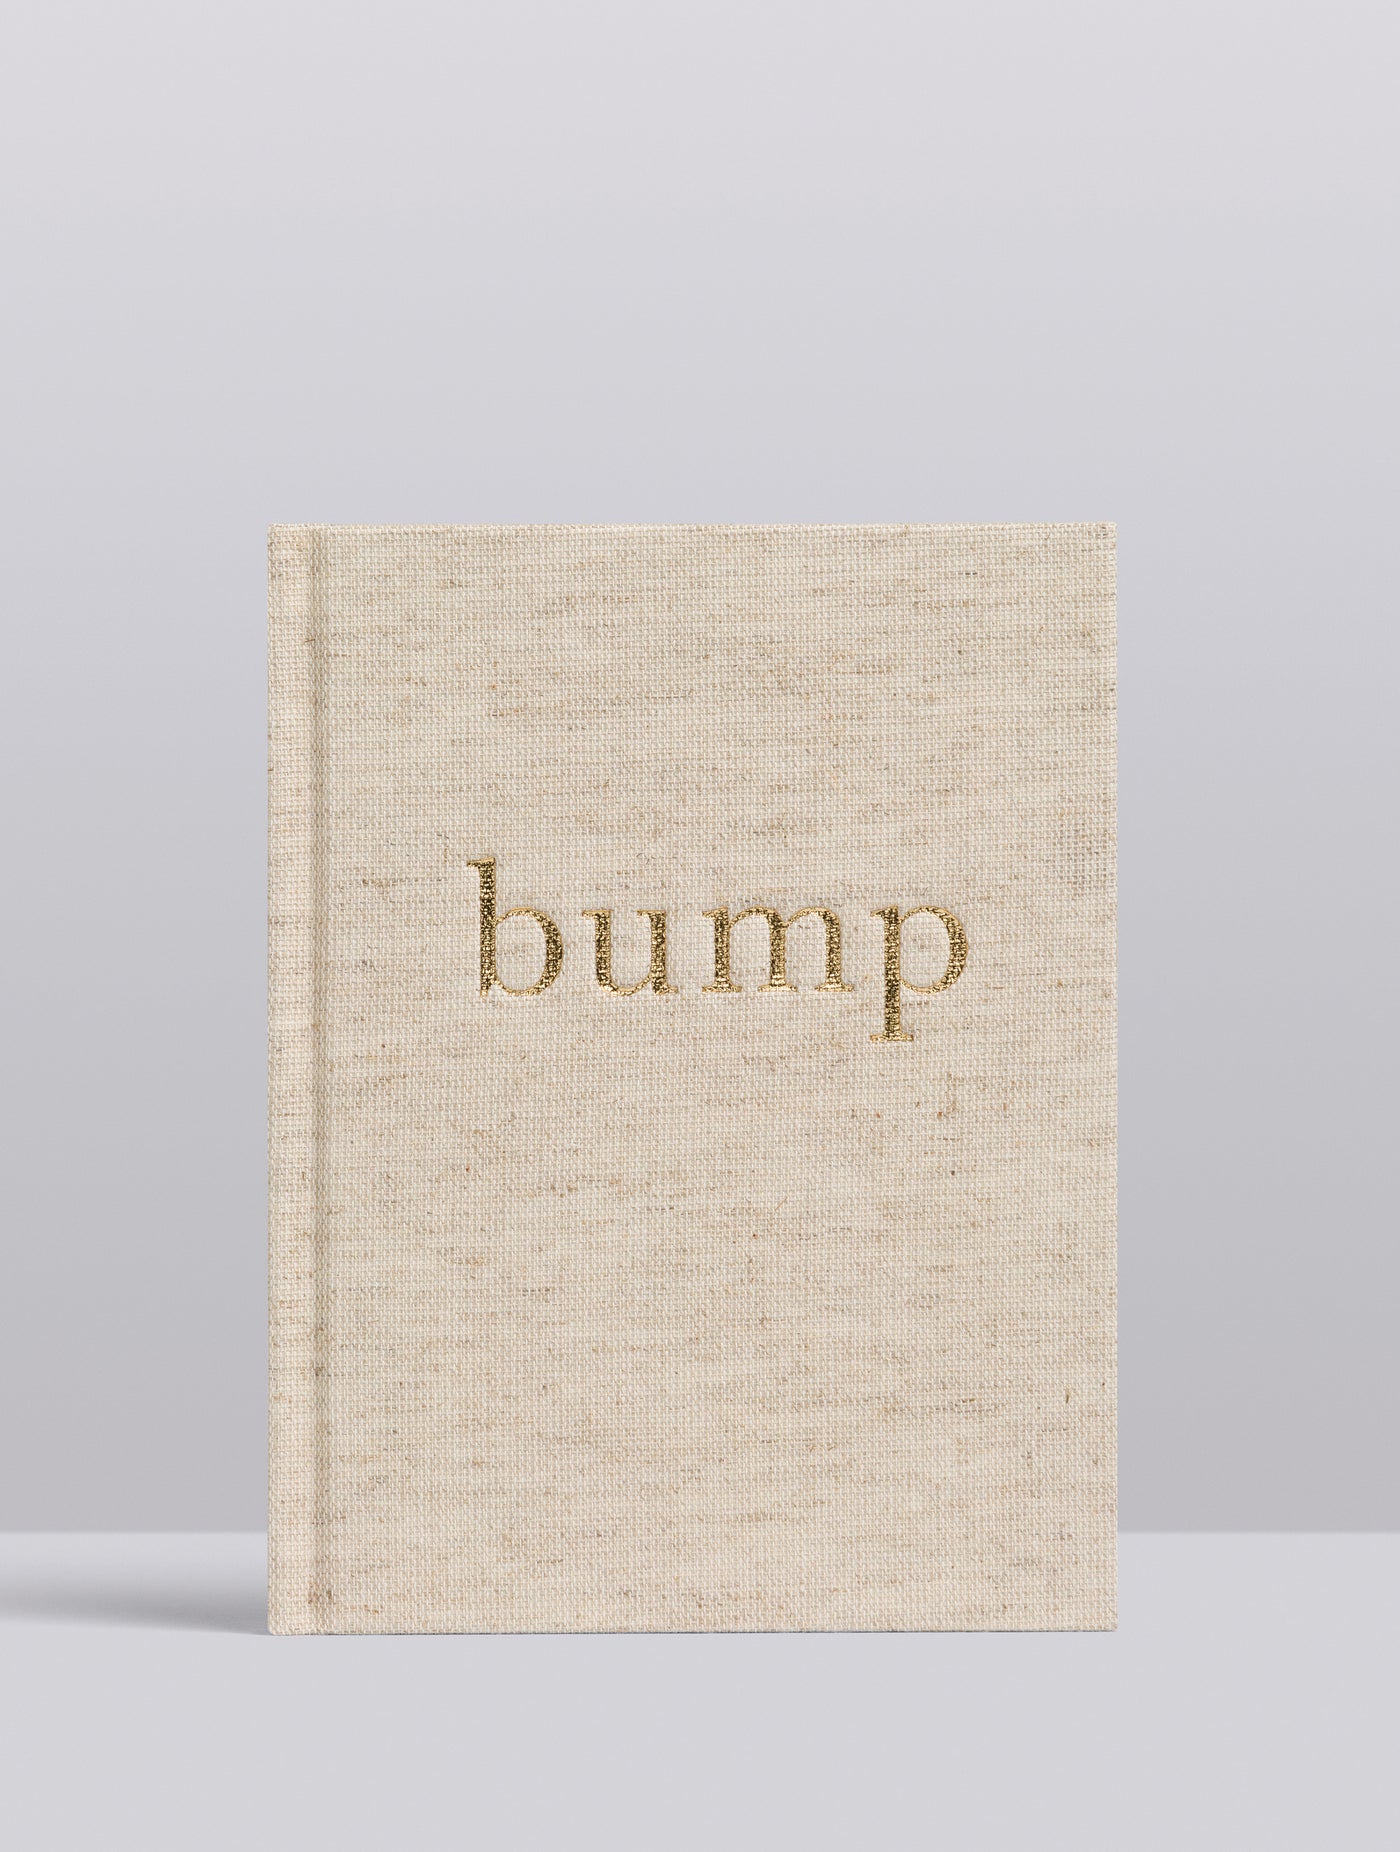 Bump | A Pregnancy Story